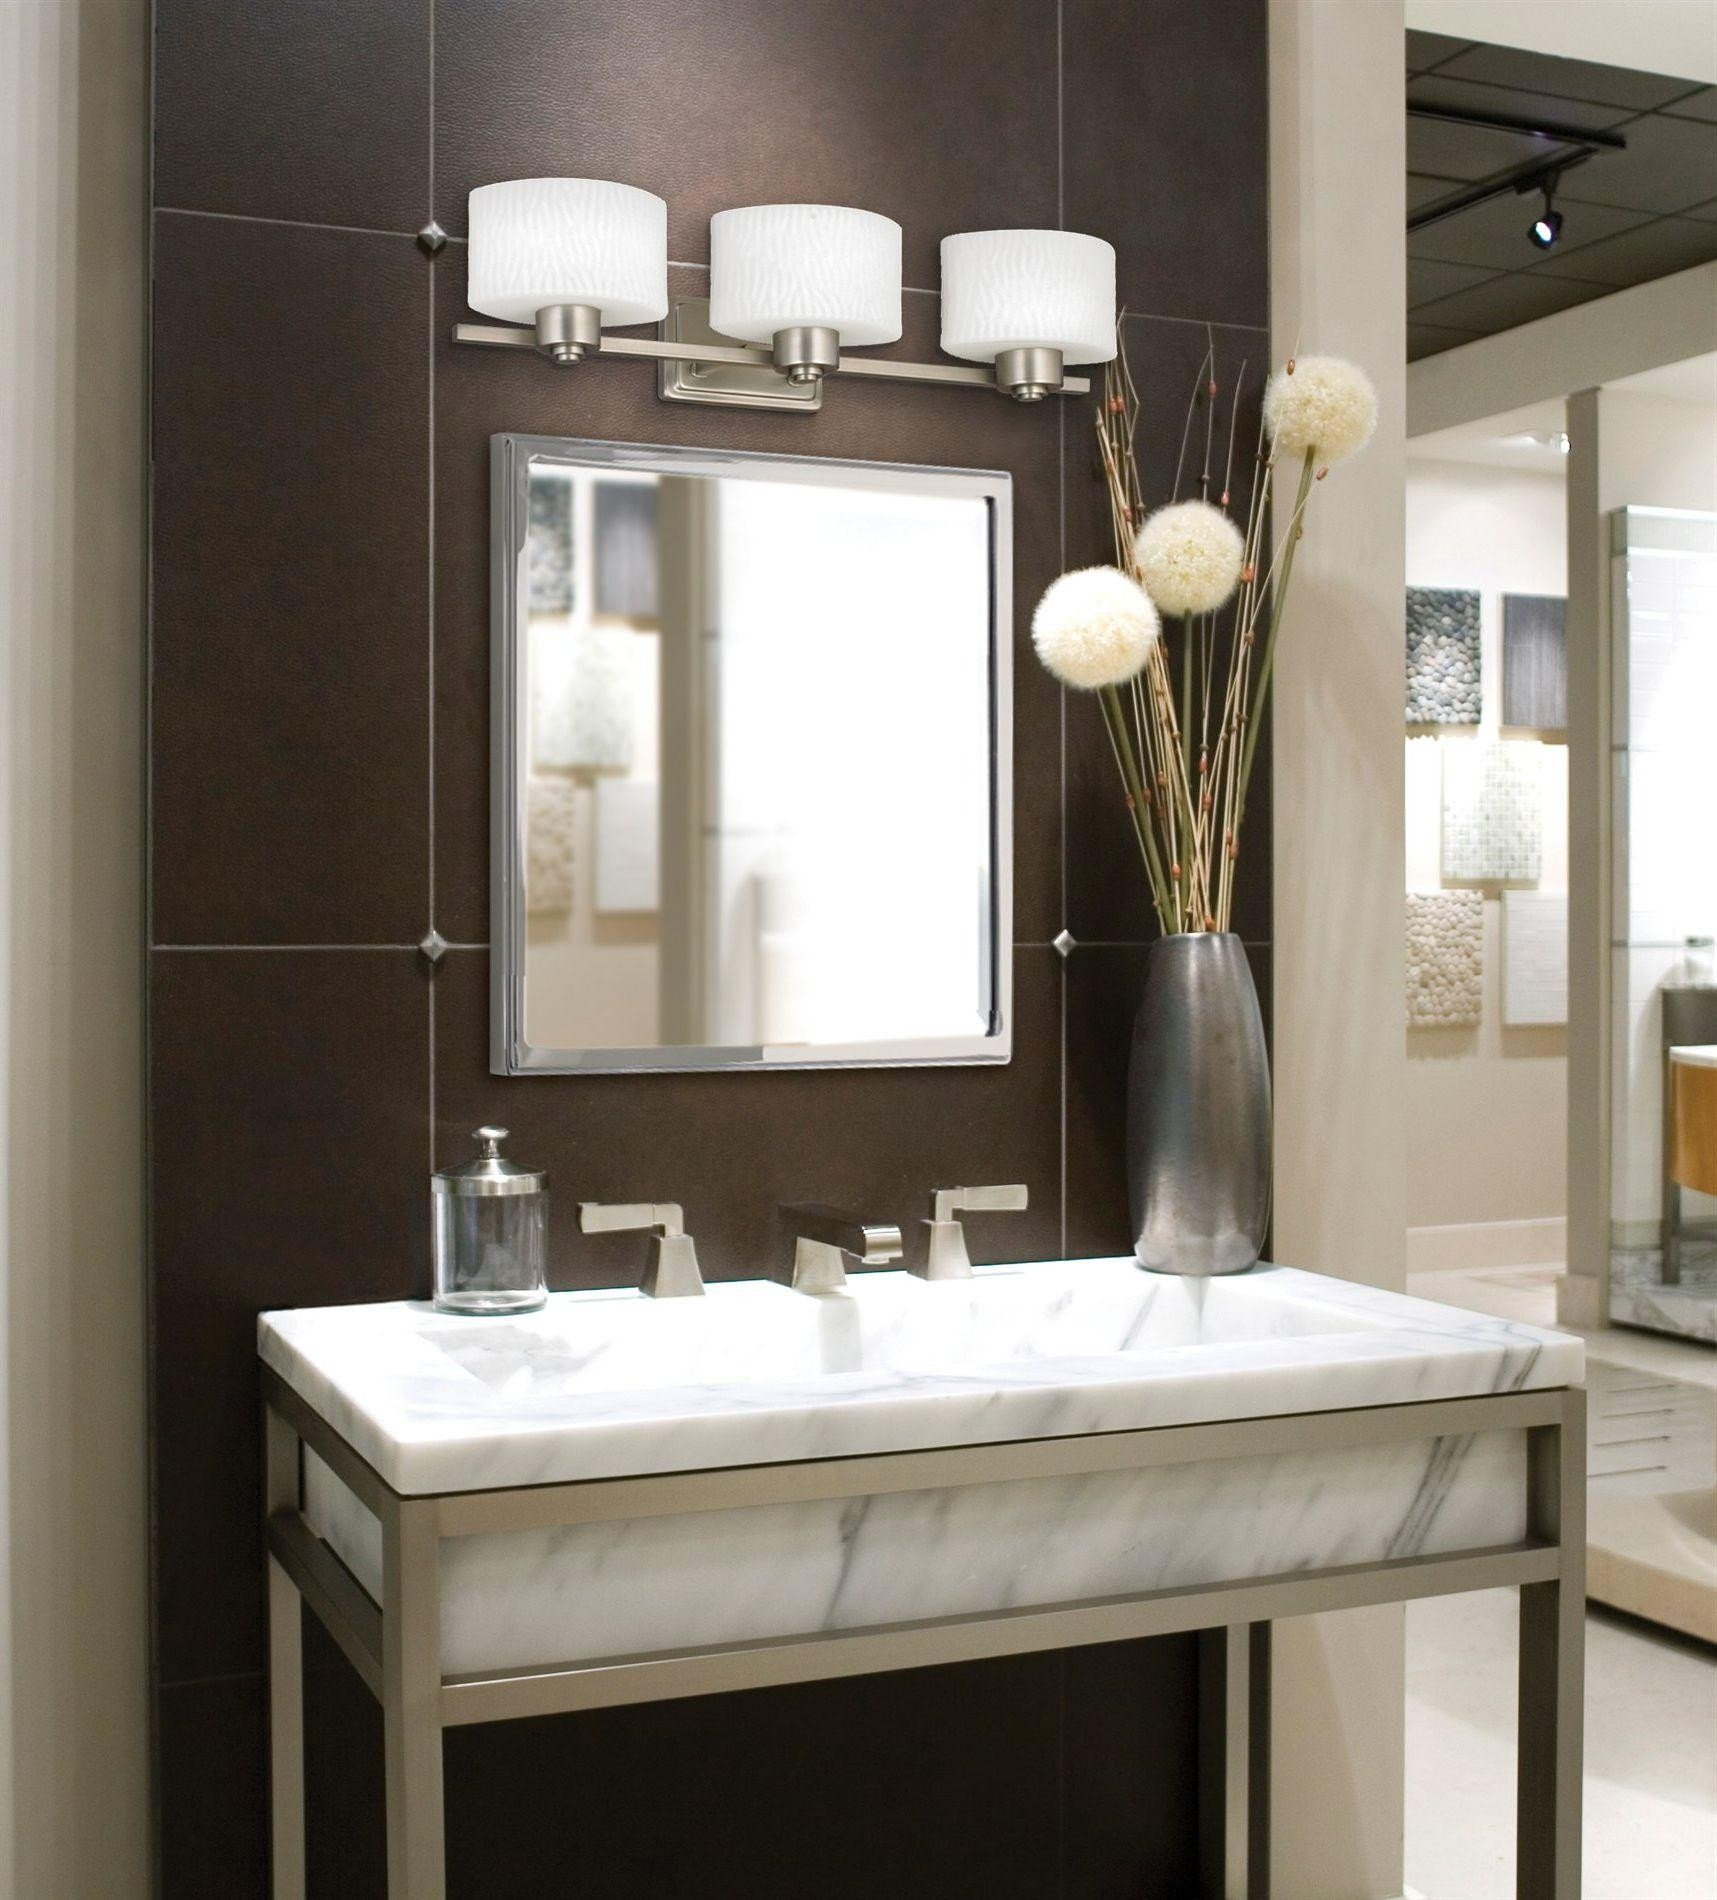 Bathroom Vanity With Mirror
 20 Bathroom Mirrors Ideas With Vanity